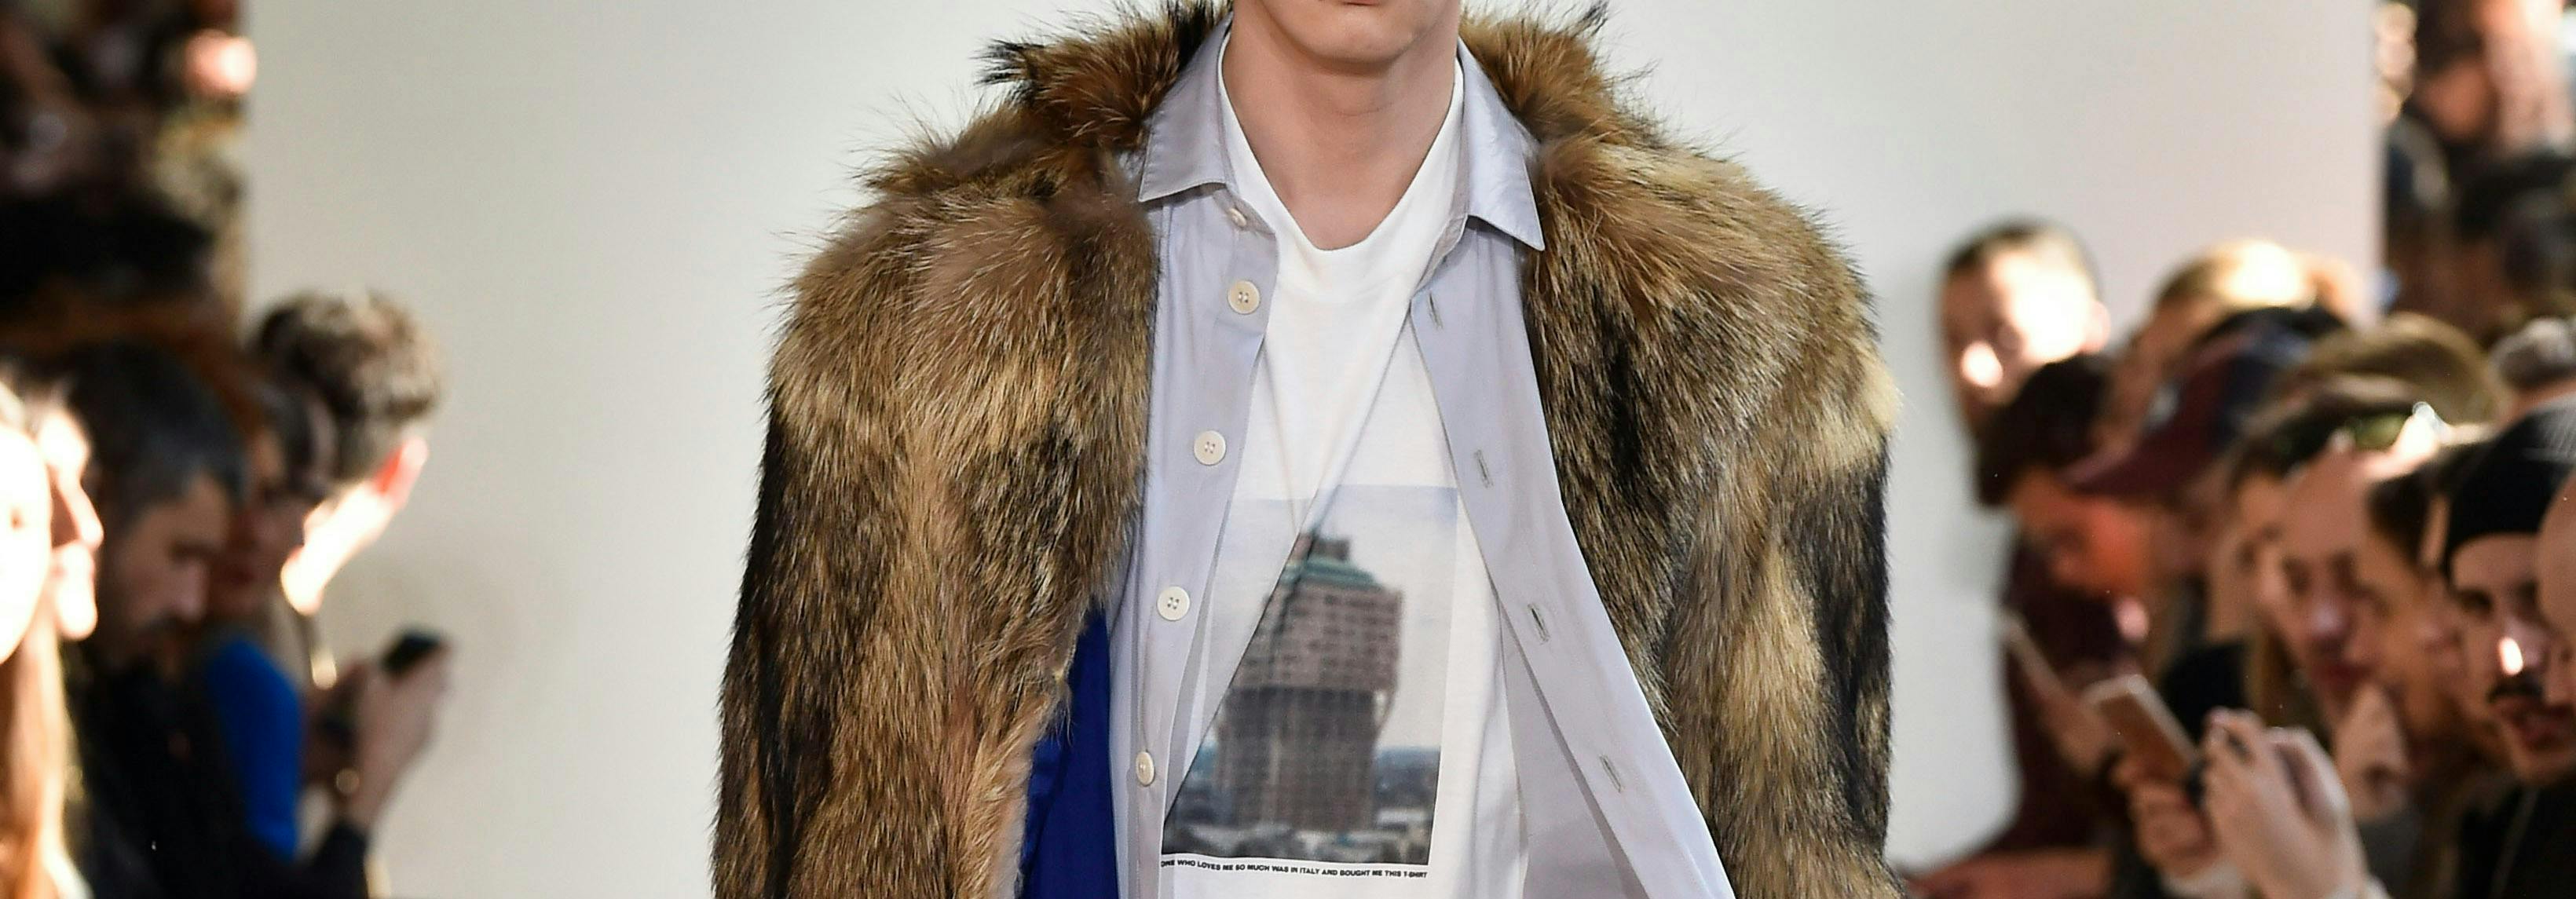 clothing apparel person human sleeve coat fur